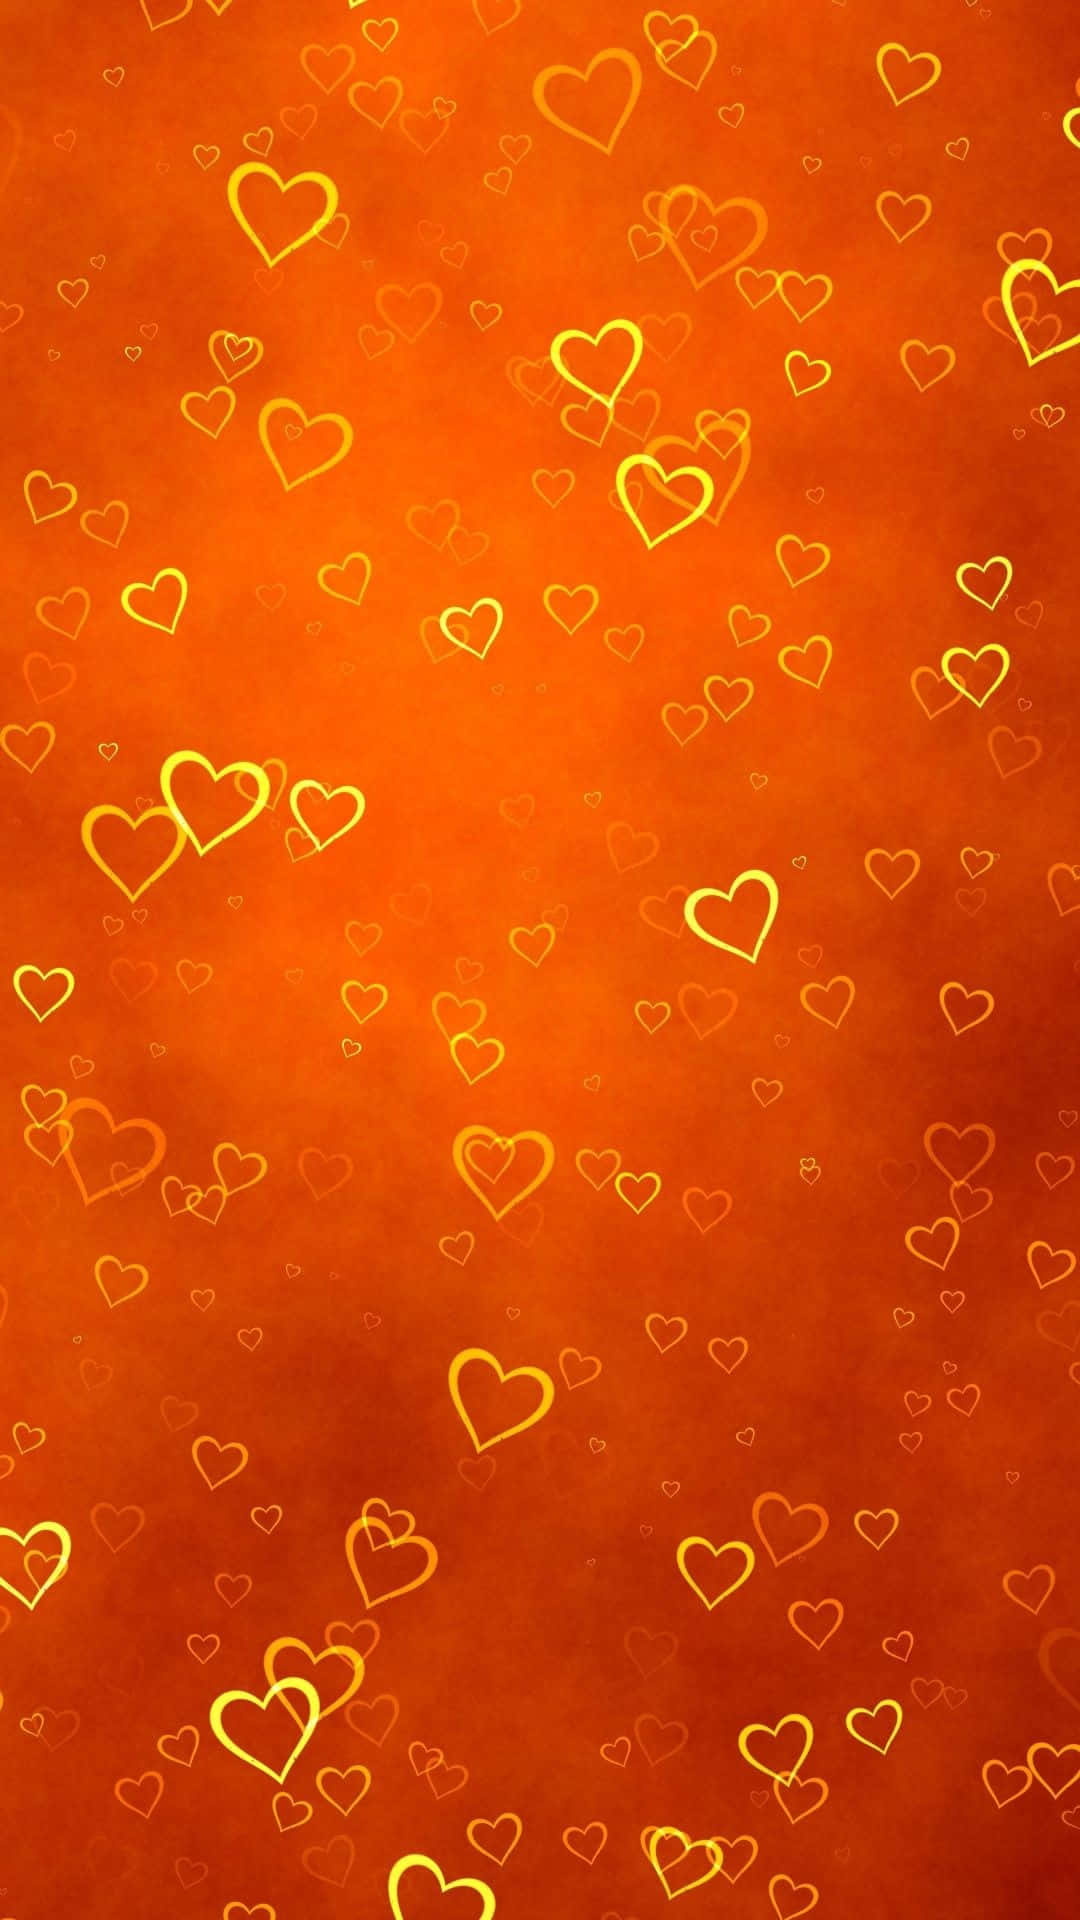 100+] Cute Orange Wallpapers | Wallpapers.com